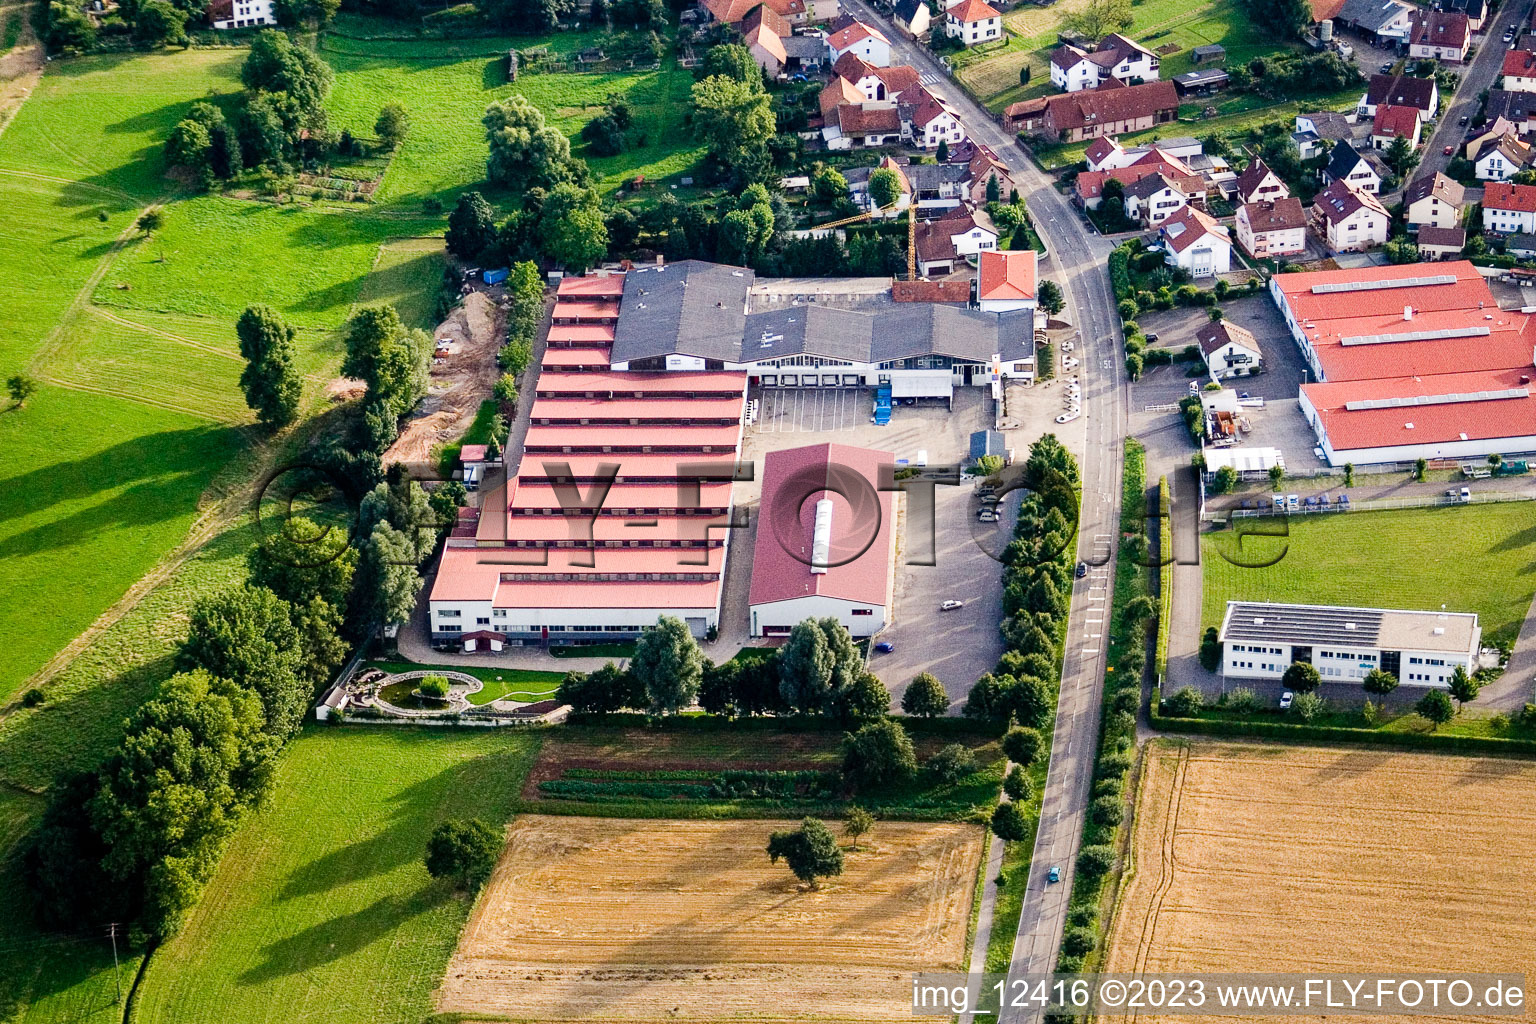 Drone image of Vogelsitz GmbH, Kleinsteinbacherstrasse 44 in the district Stupferich in Karlsruhe in the state Baden-Wuerttemberg, Germany